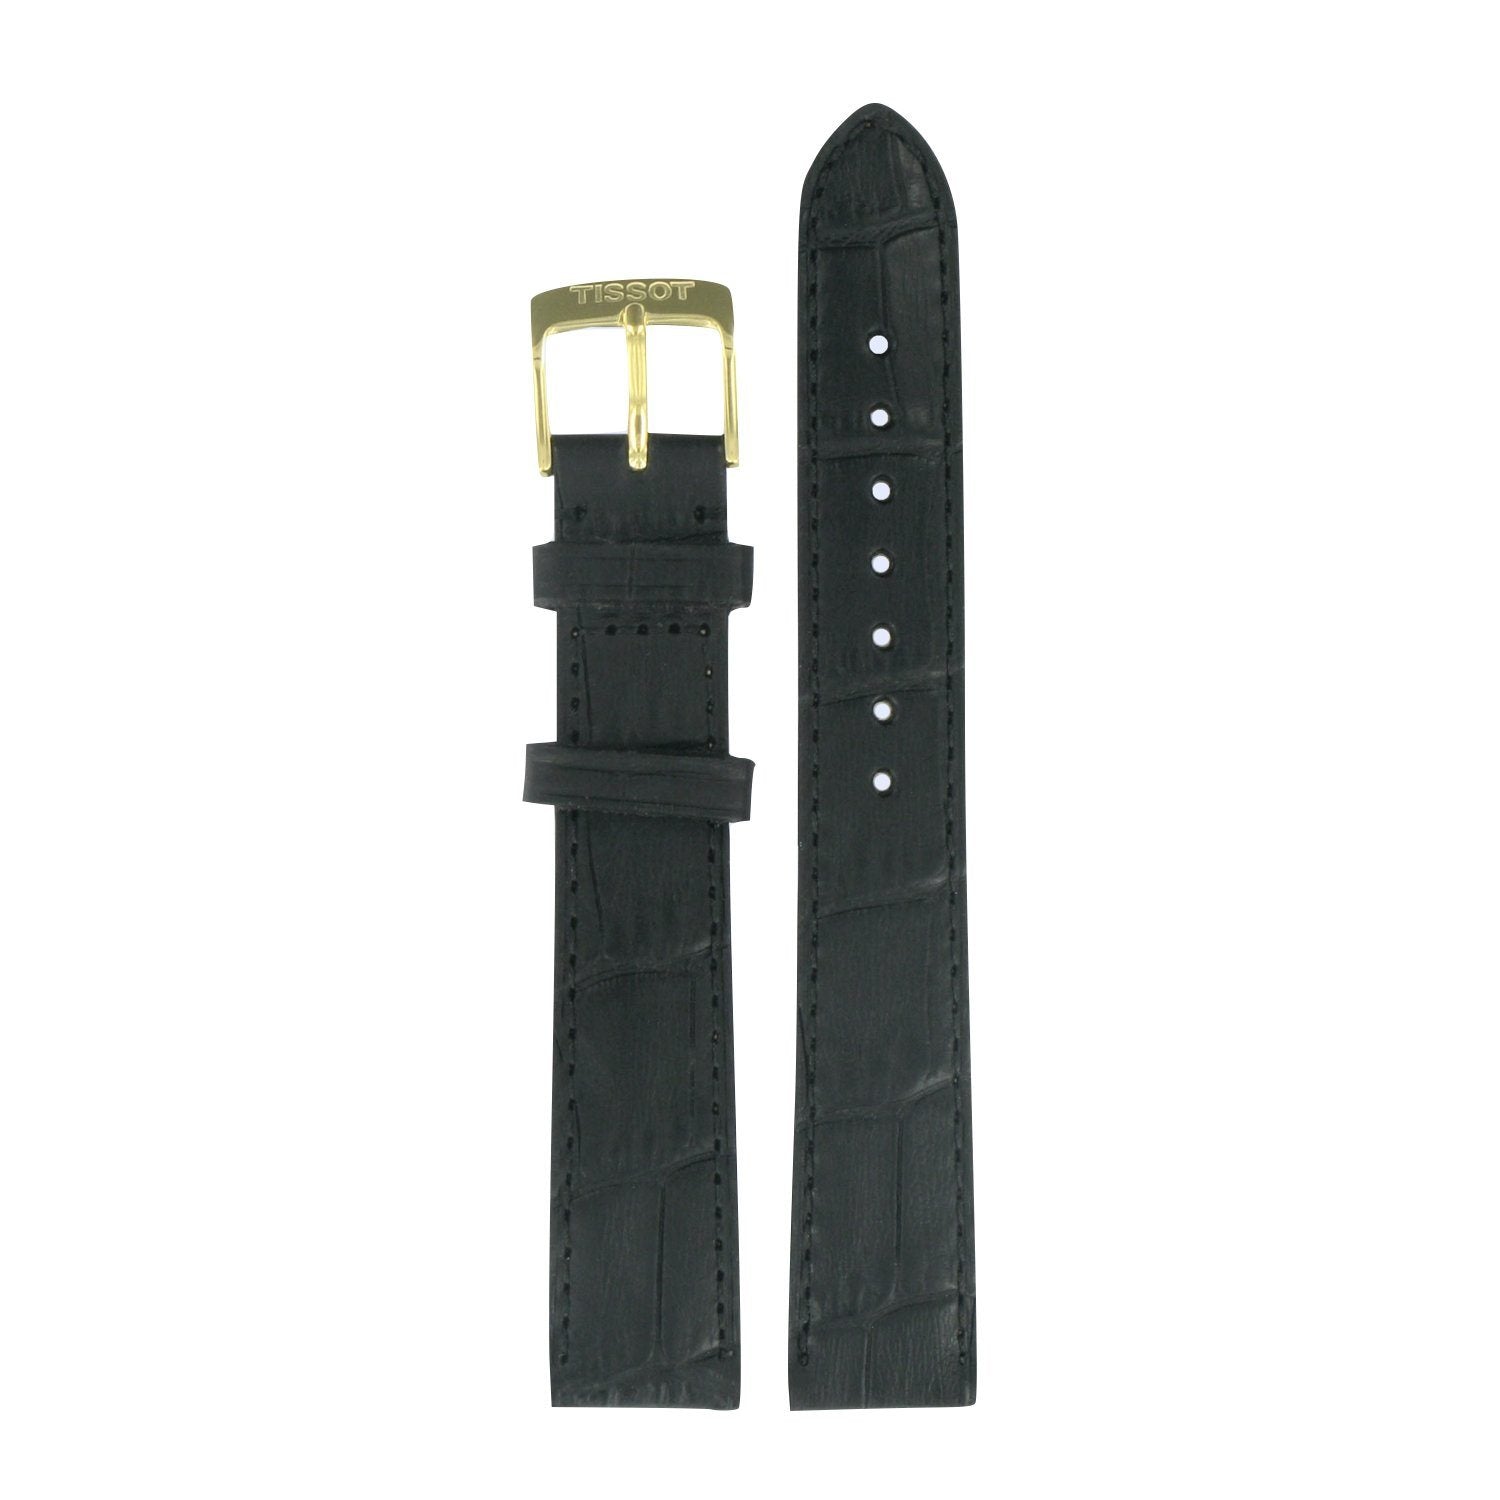 Genuine Tissot 16mm Jasmin Black Leather Strap by Tissot